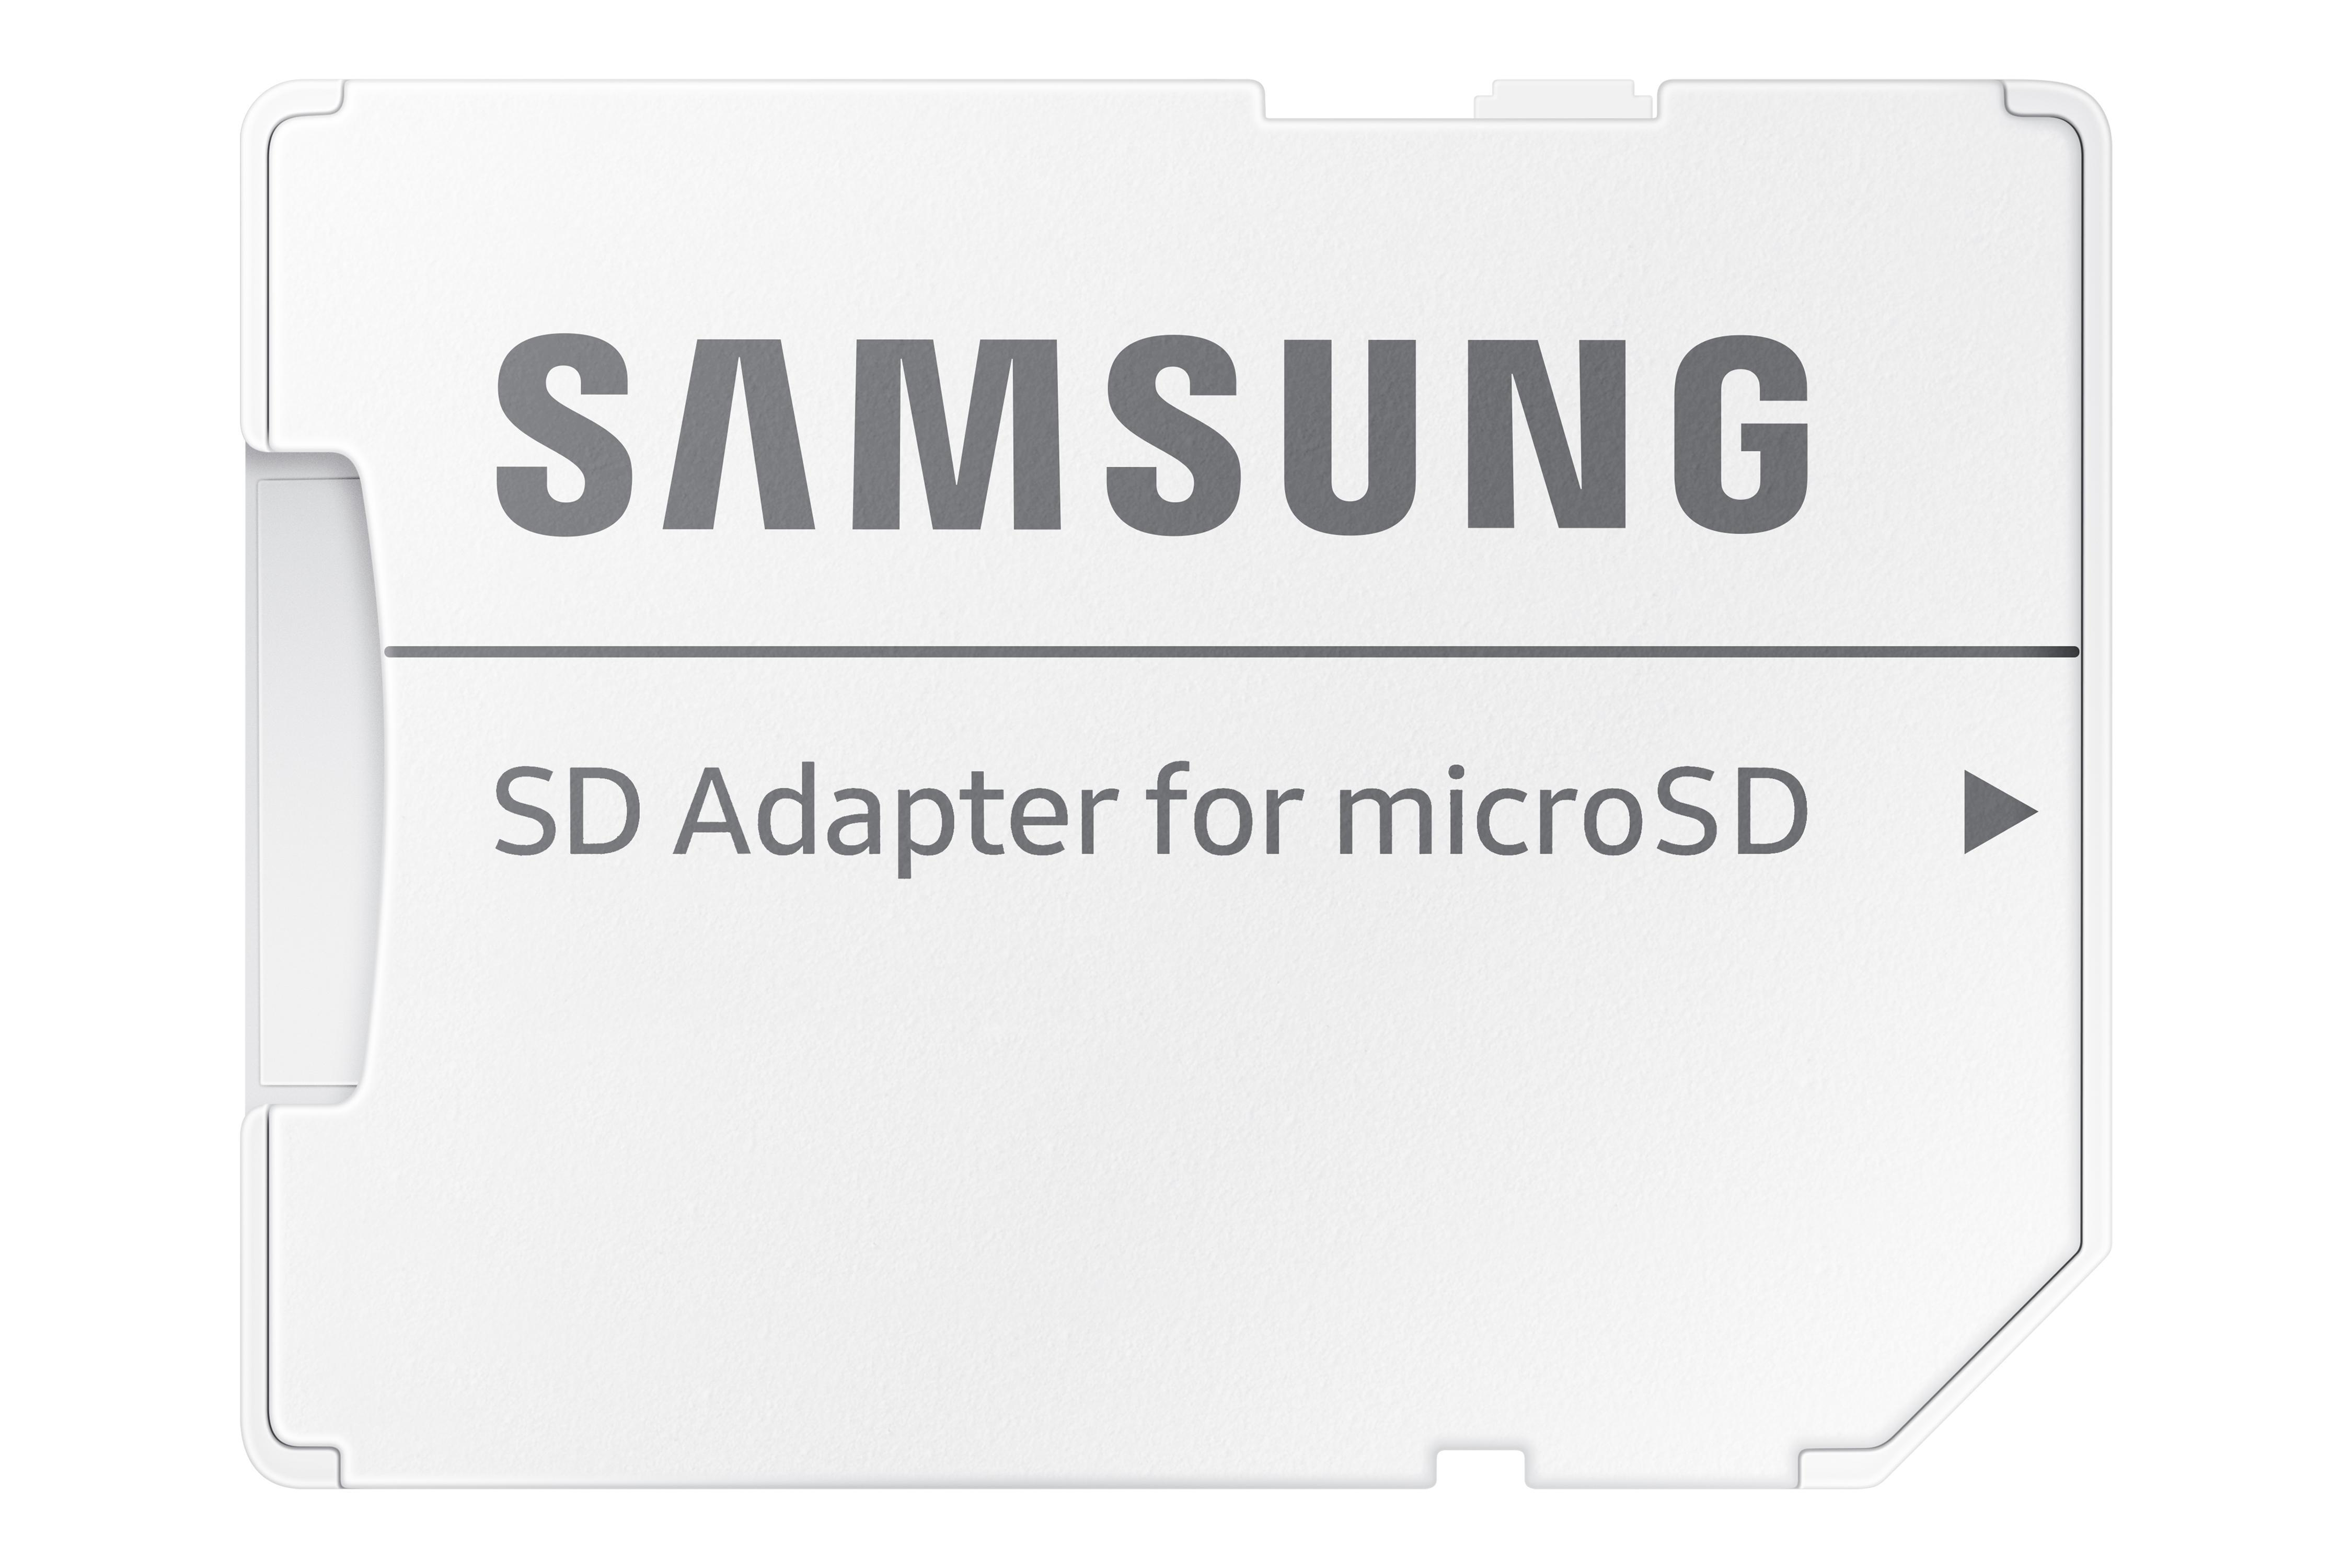 Endurance PRO GB, Micro-SDXC 100 MB/s 256 (2022), SAMSUNG Speicherkarte,